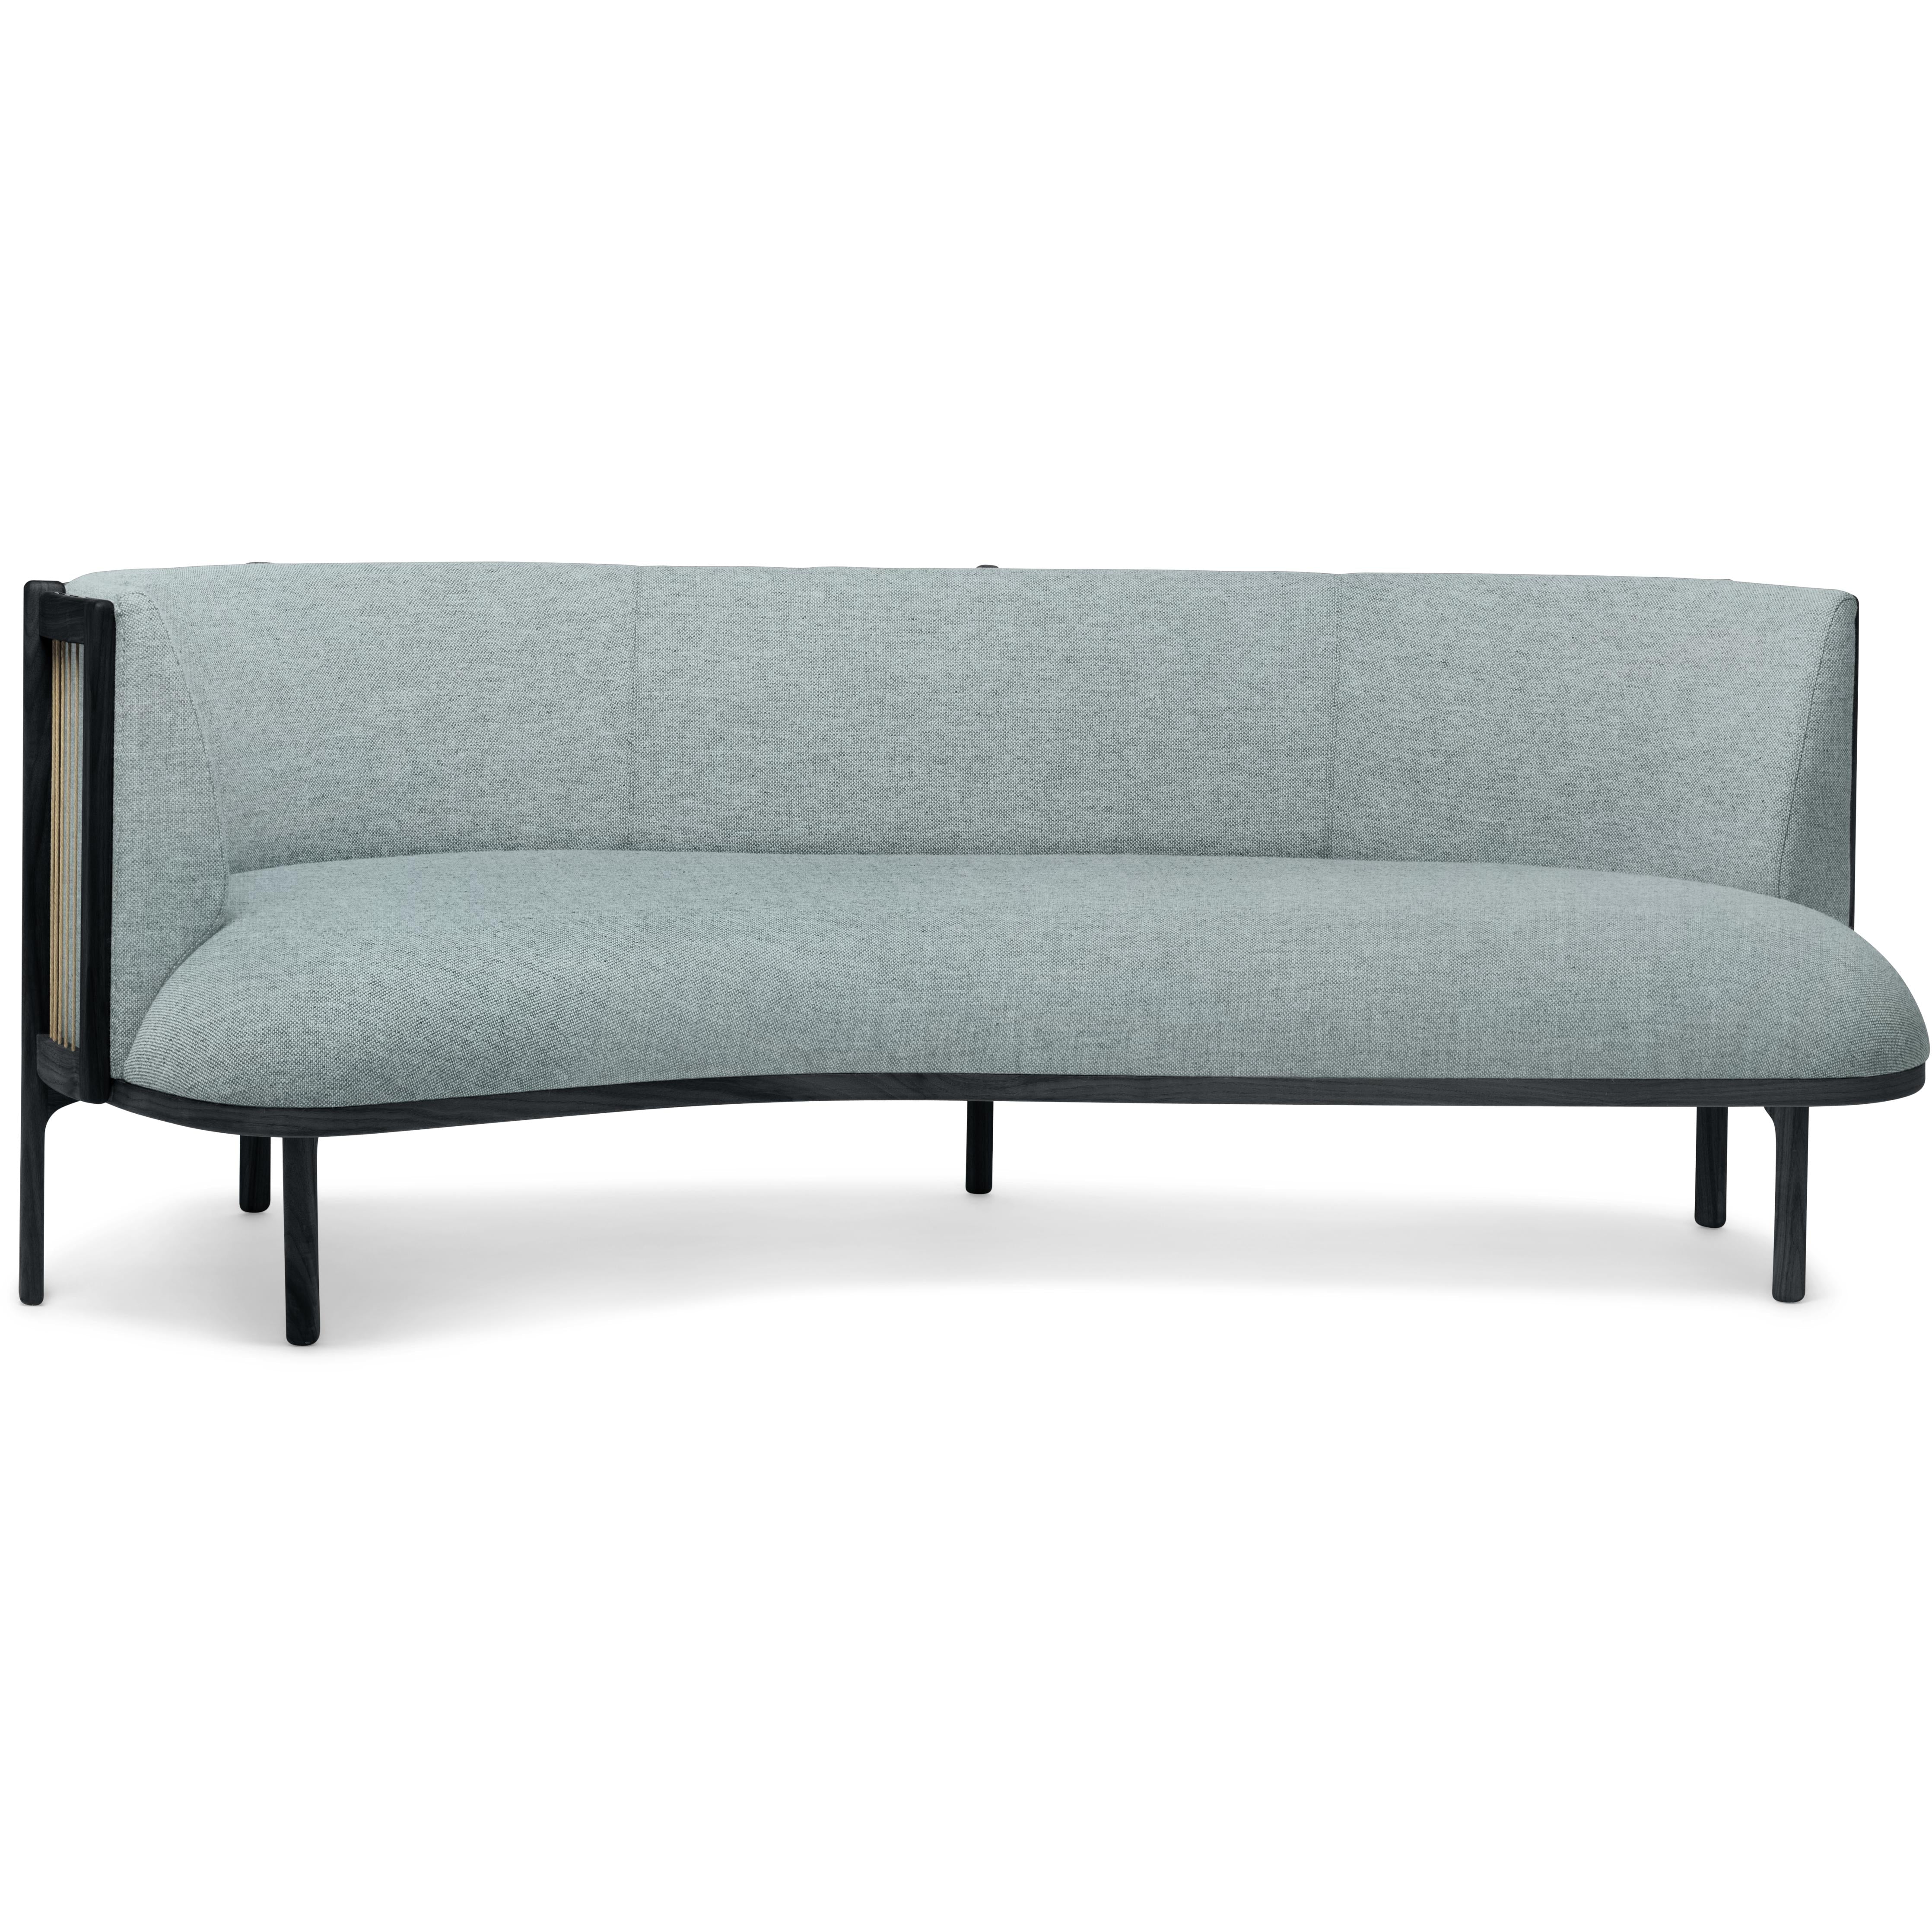 Carl Hansen Rf1903 L Sideways Sofa 3 Seater Left Oak/Remix Fabric, Blue/Black